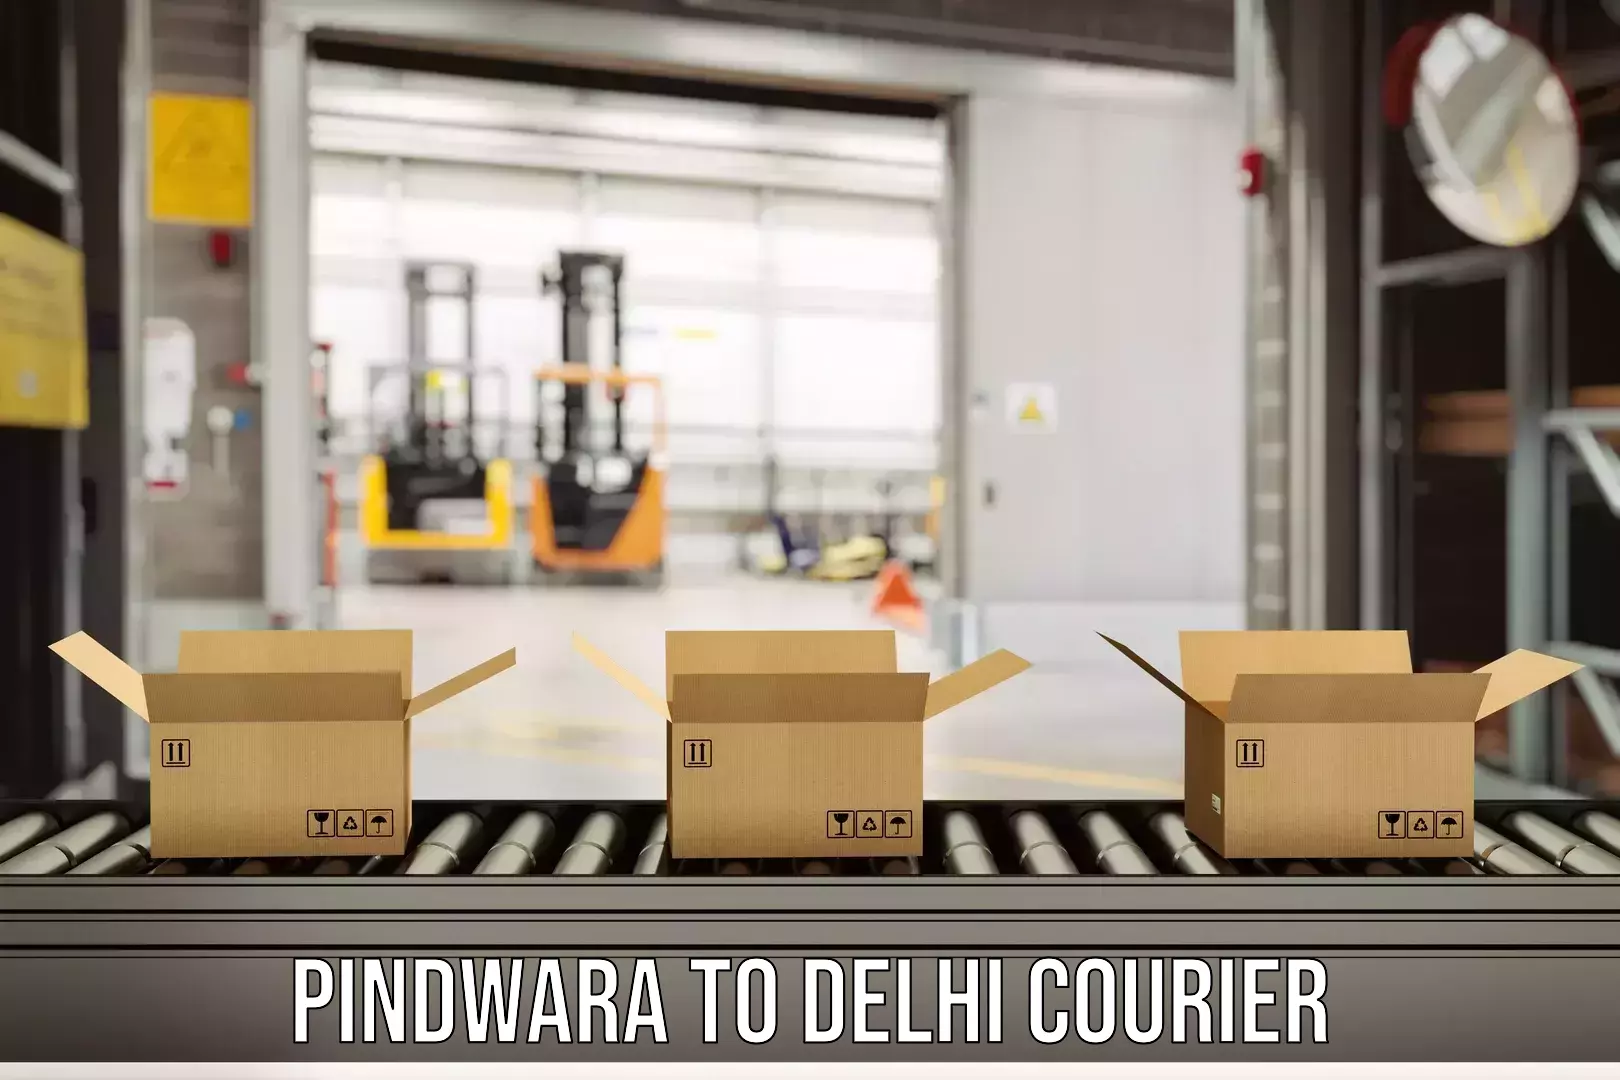 Courier service innovation Pindwara to Subhash Nagar